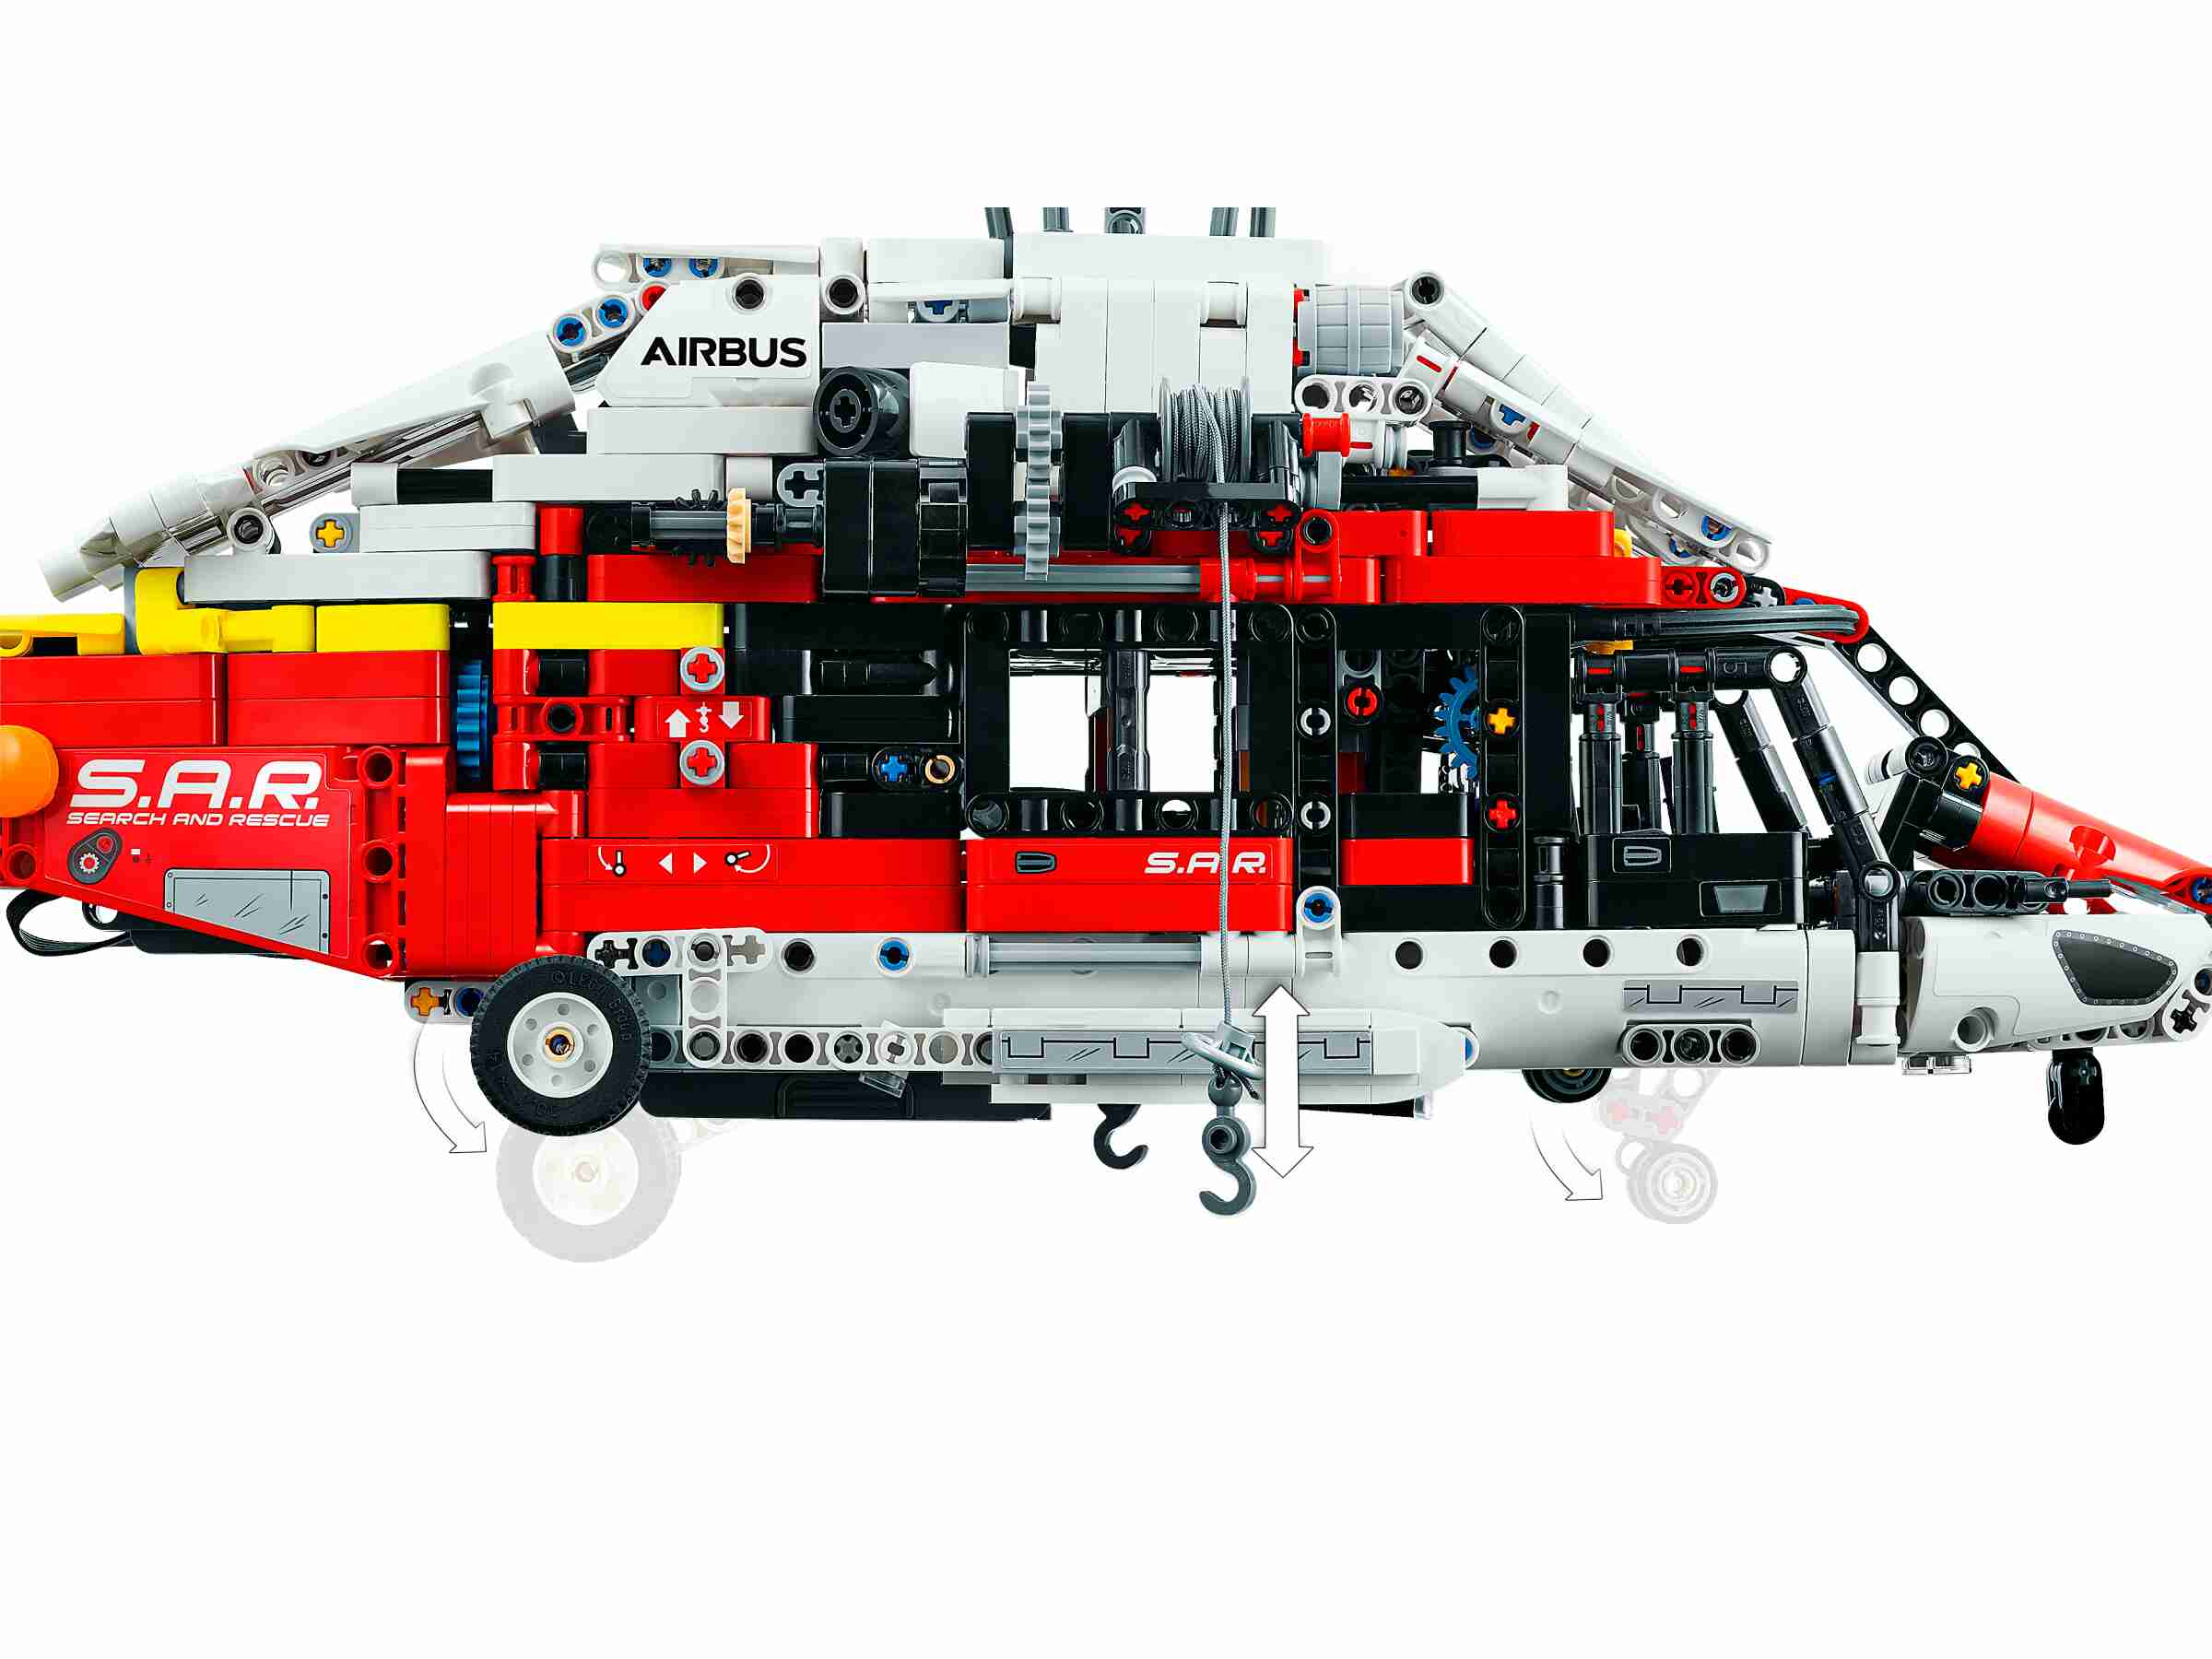 LEGO 42145 Technic Airbus H175 Rettungshubschrauber